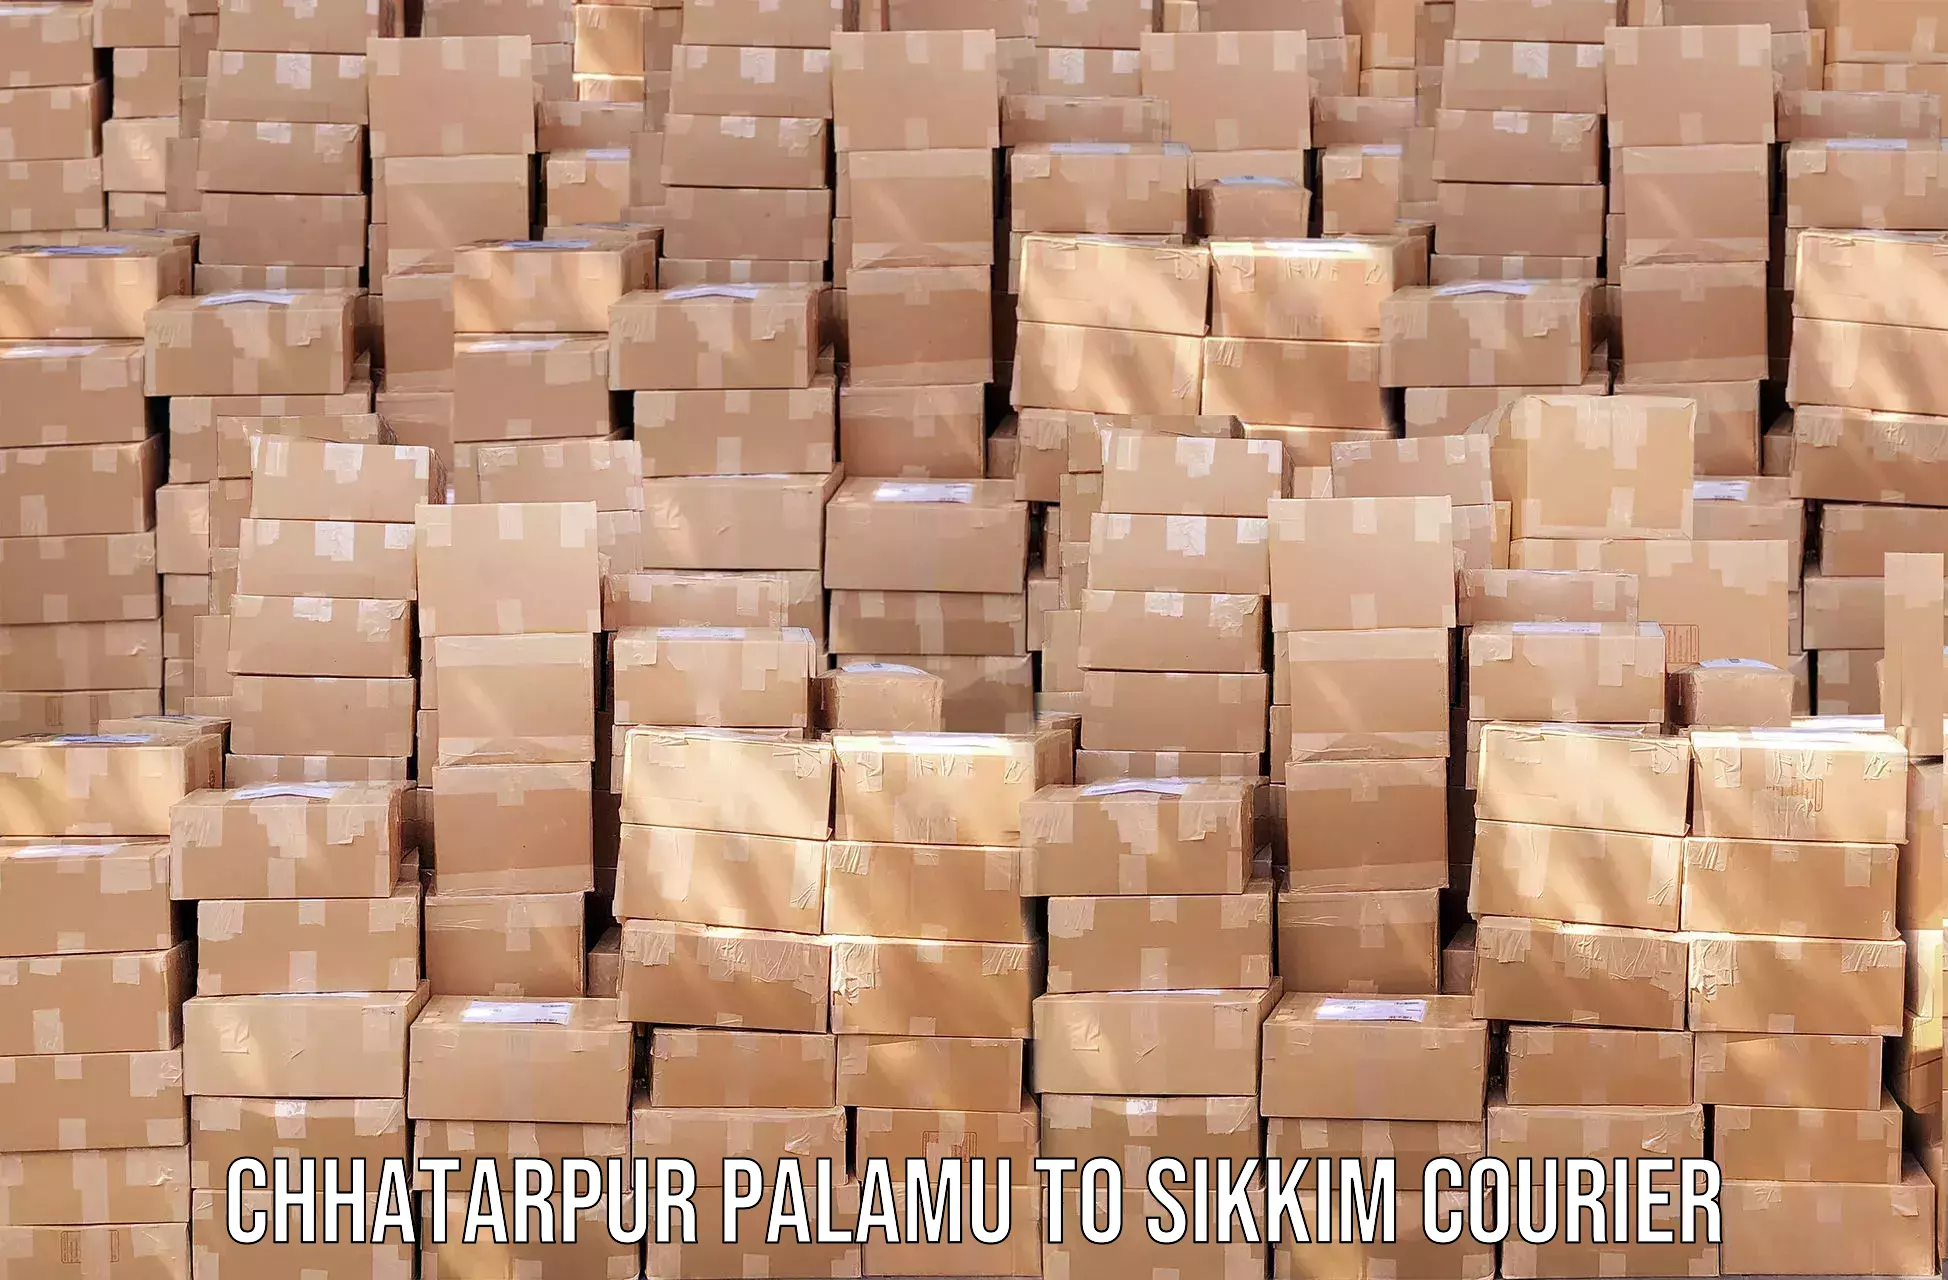 Courier service innovation Chhatarpur Palamu to Mangan